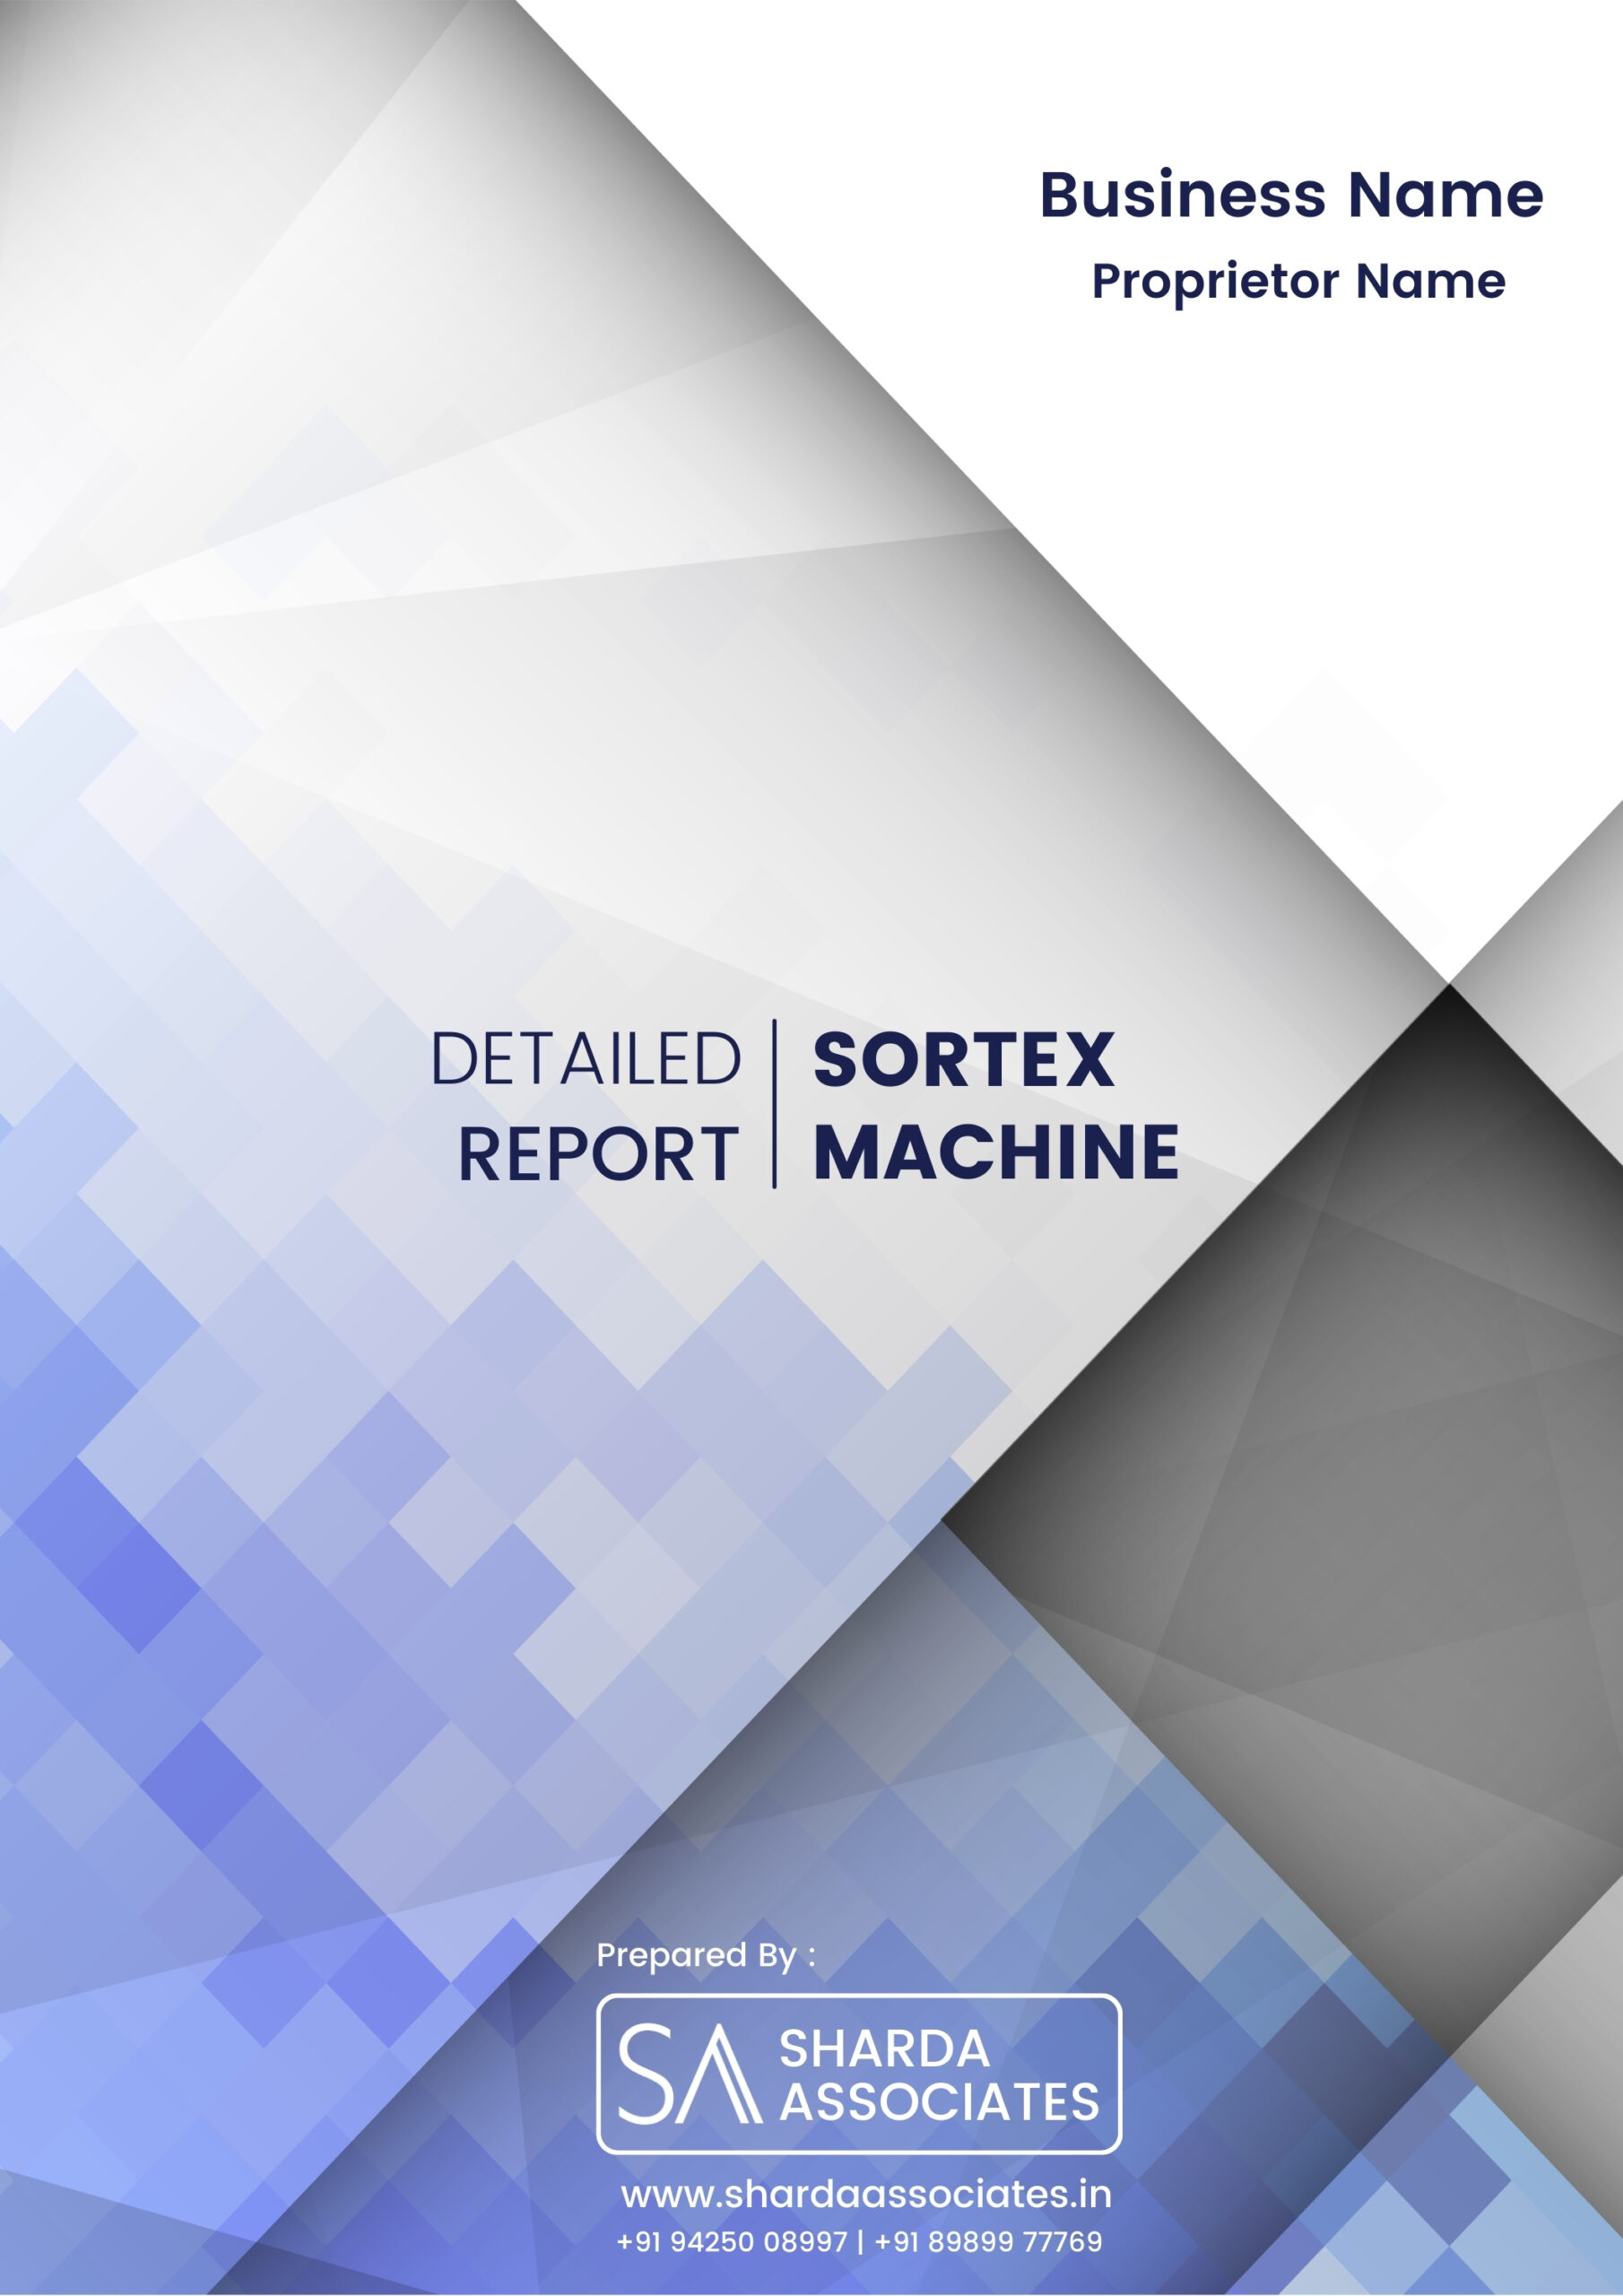 Detailed Report On Sortex Machine